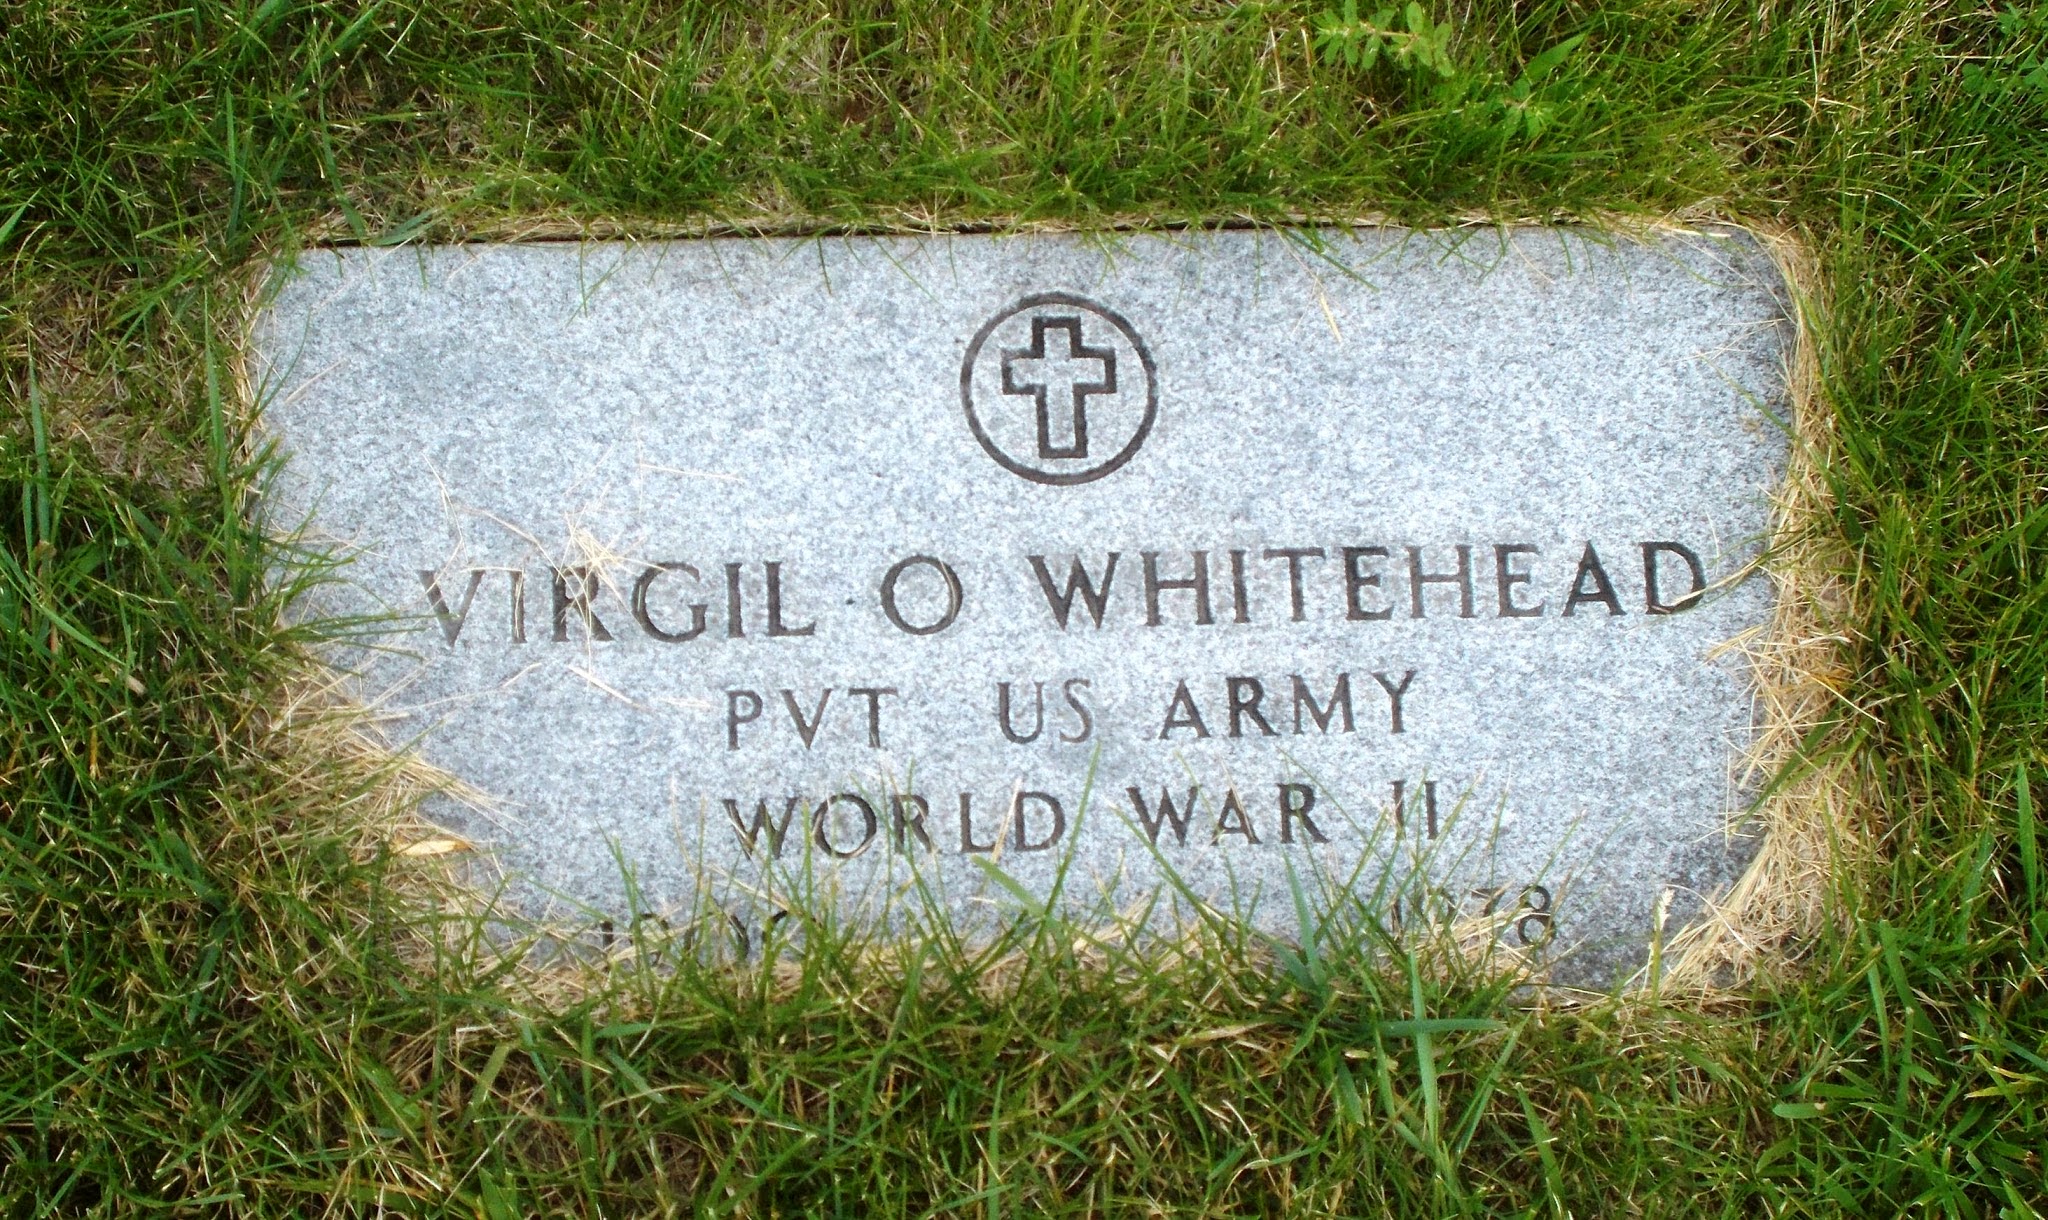 Virgil O Whitehead